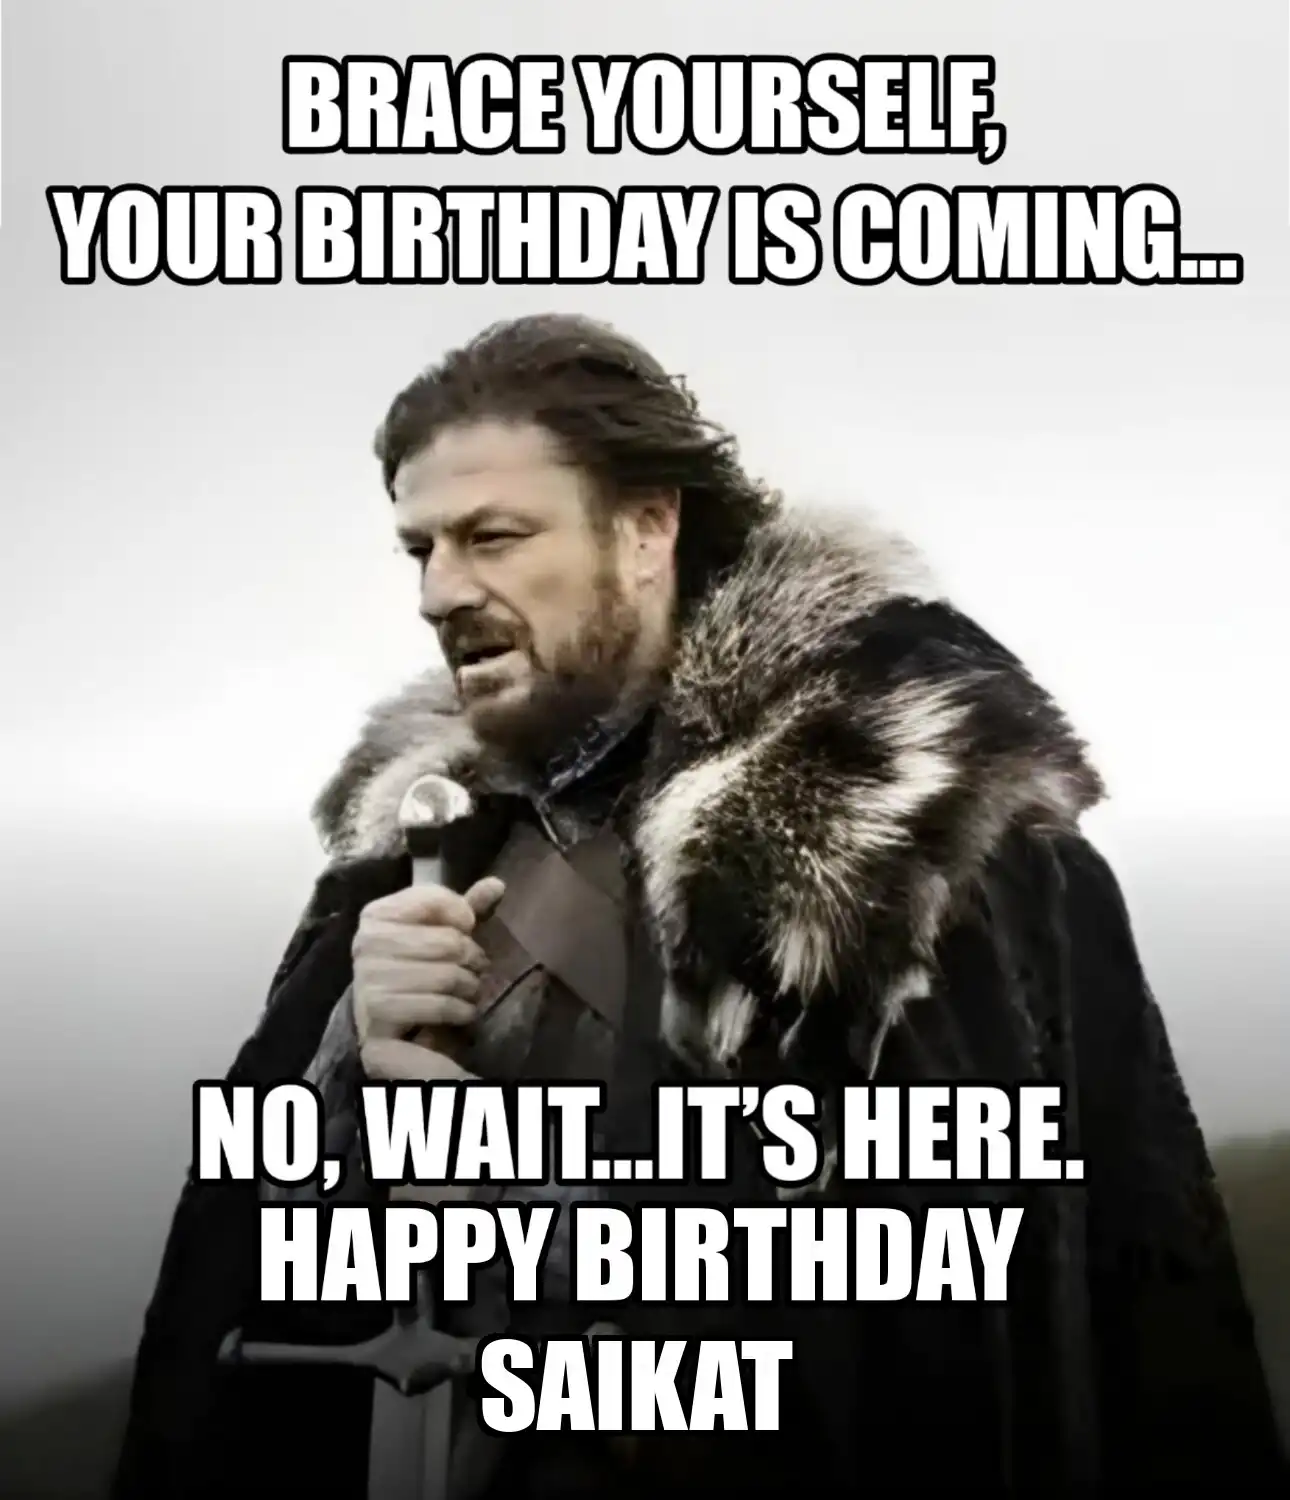 Happy Birthday Saikat Brace Yourself Your Birthday Is Coming Meme